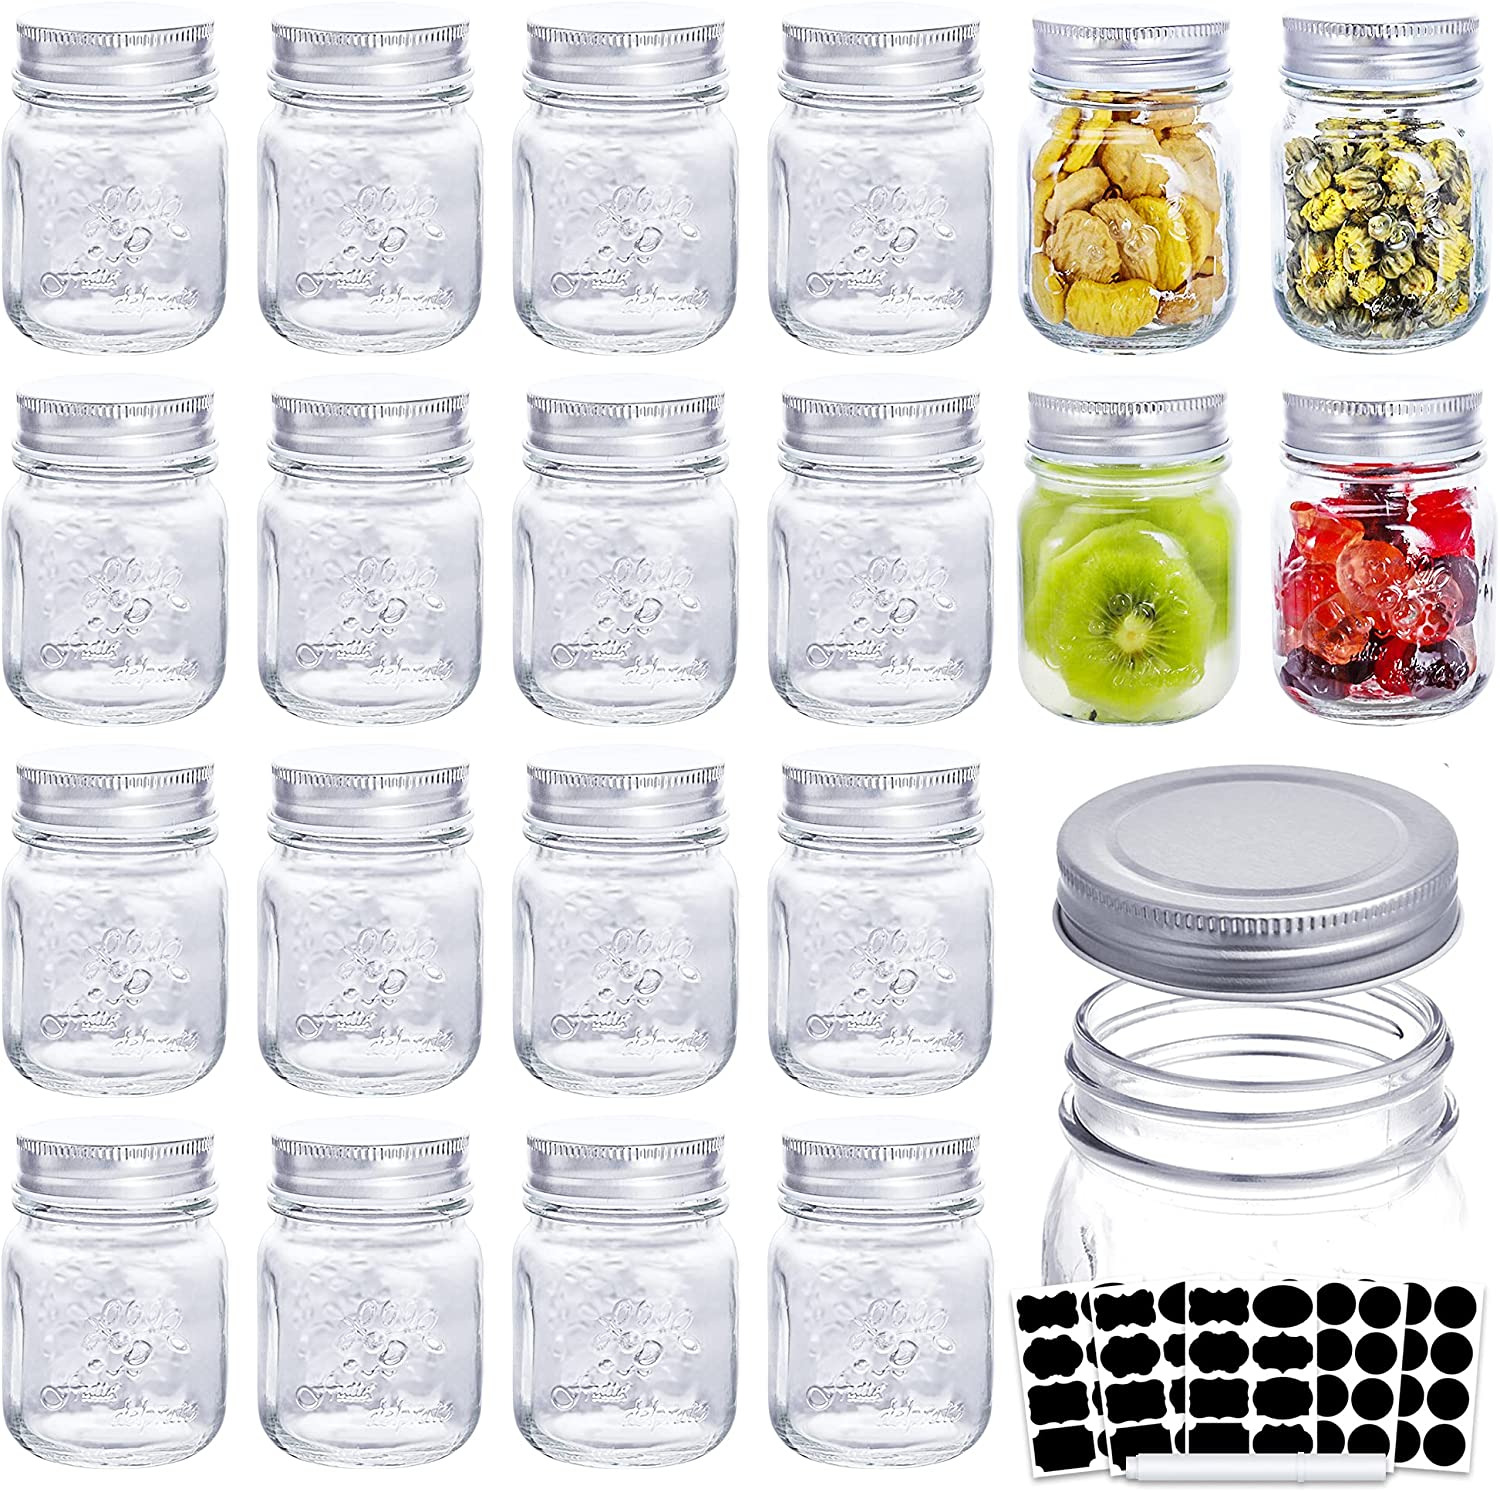 Glass Jars with Lids,Spice Jars,Small Mason Jars Regular Mouth Set of 20 6Oz